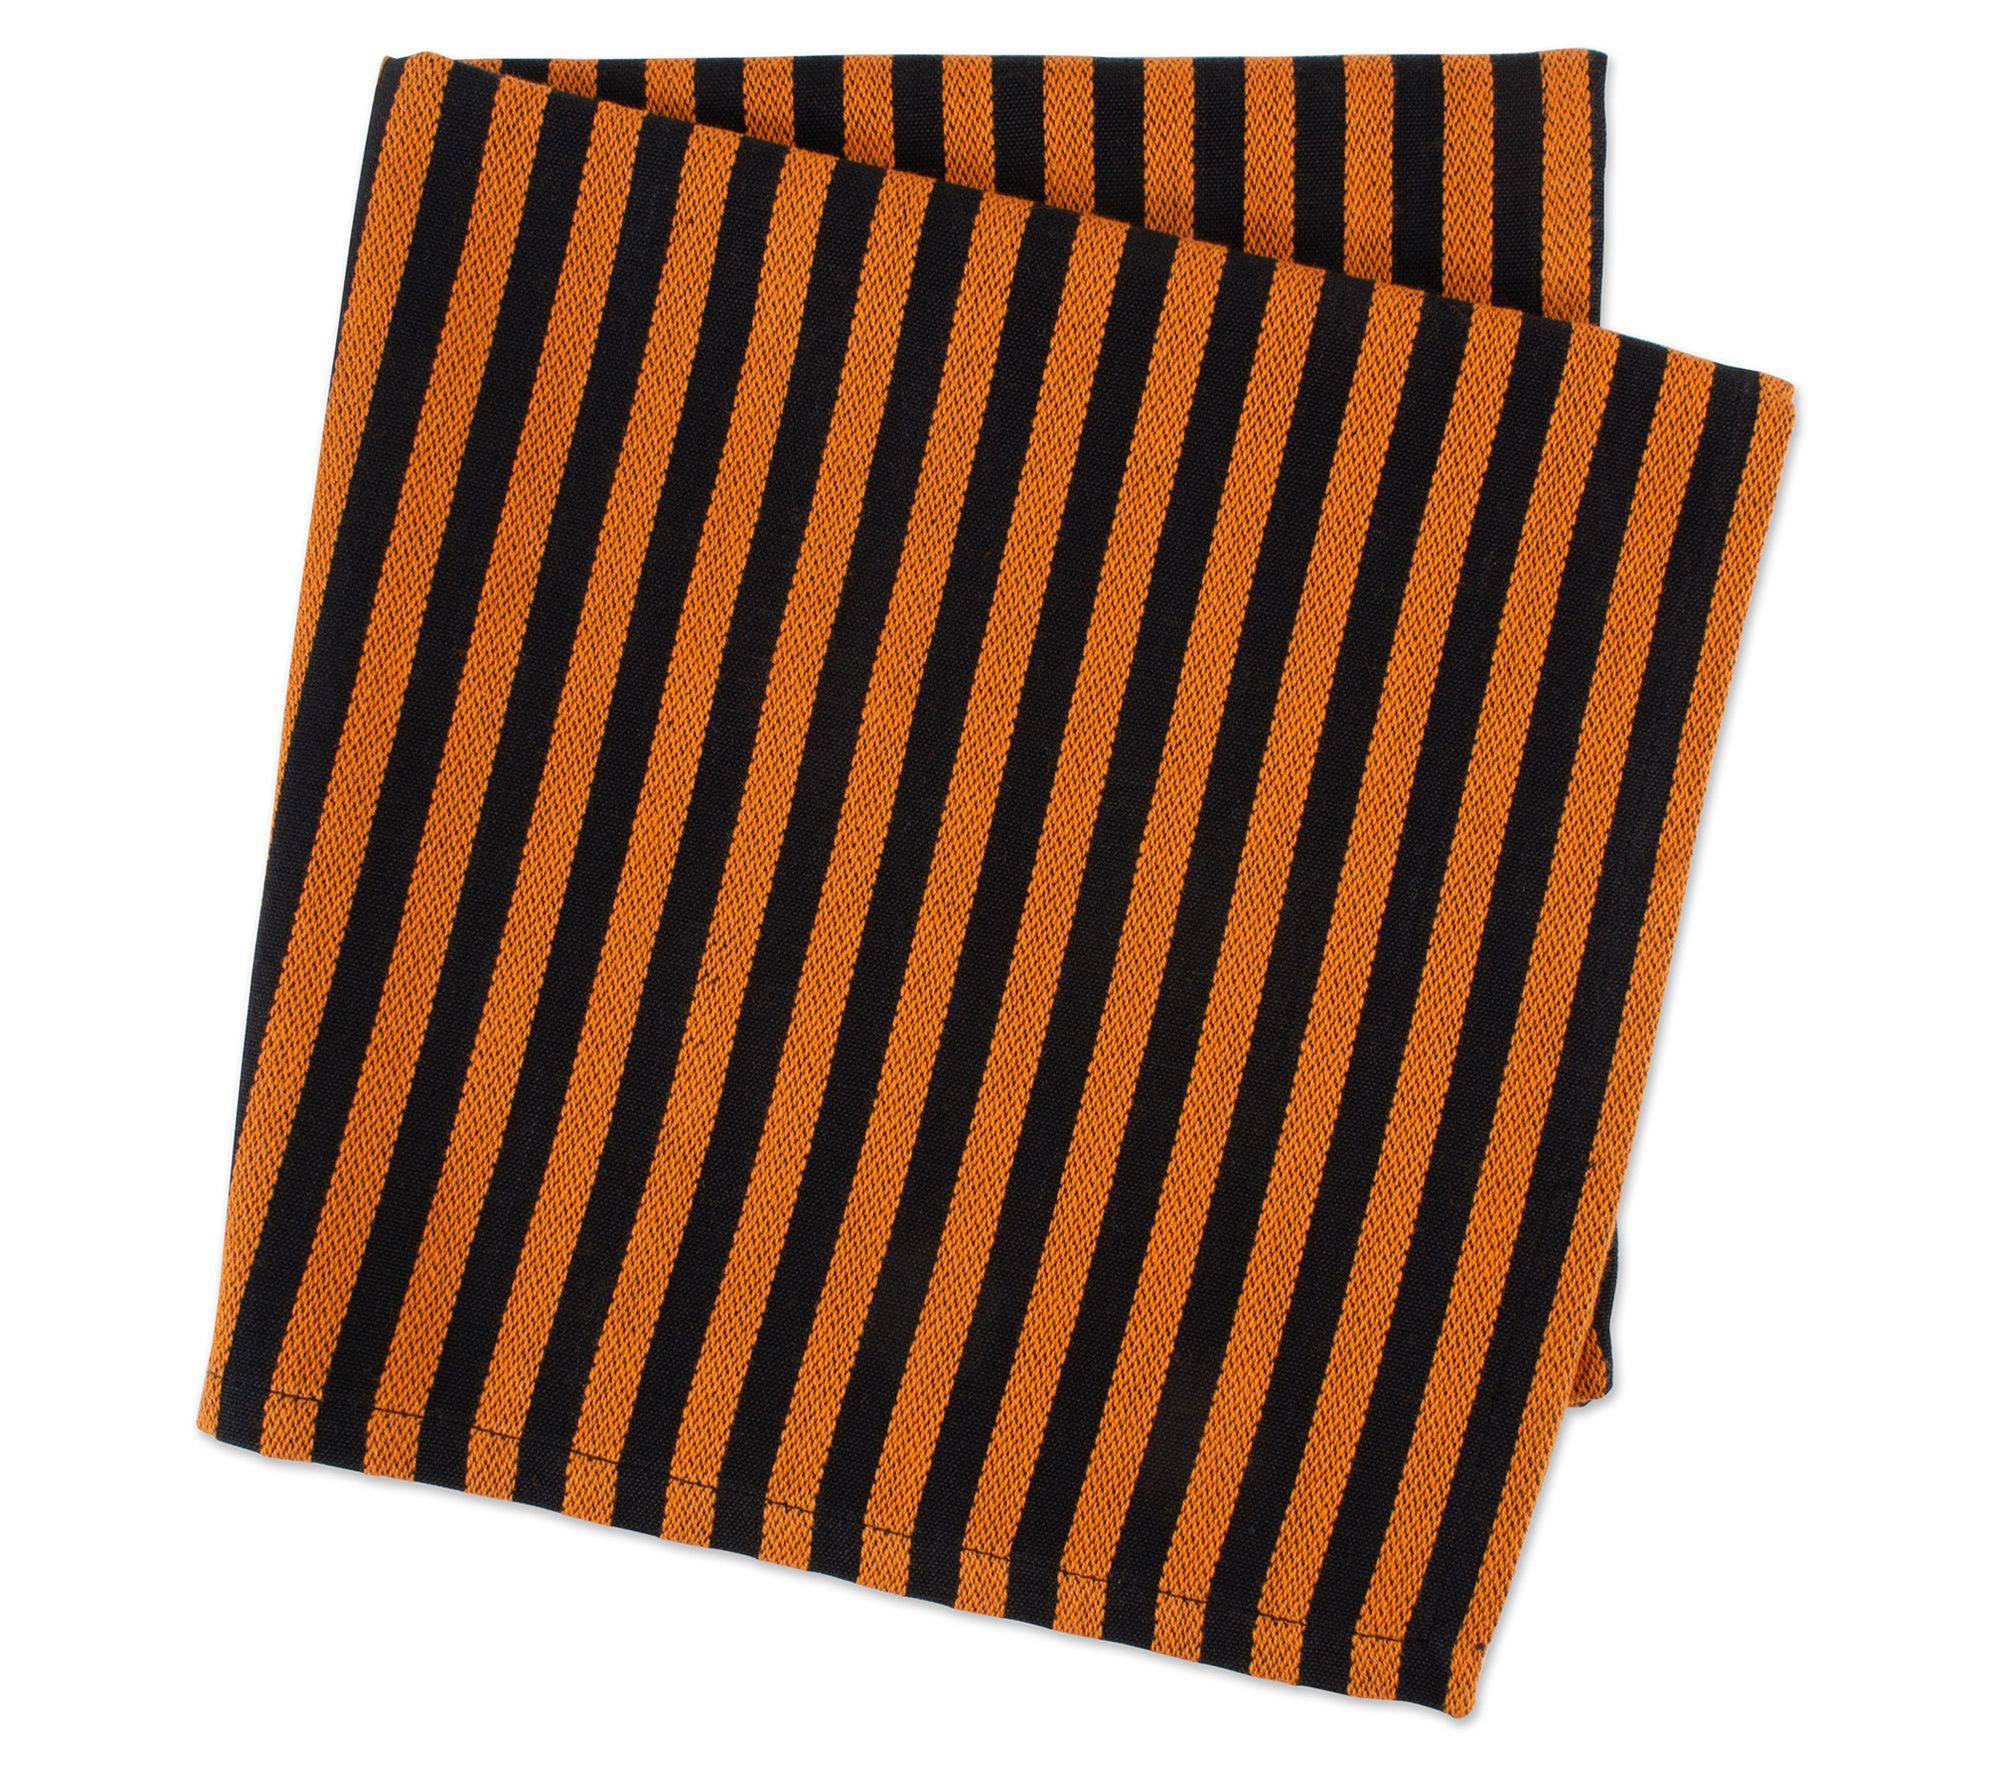 Design Imports Witchy Stripe Napkin Set of 6 - QVC.com